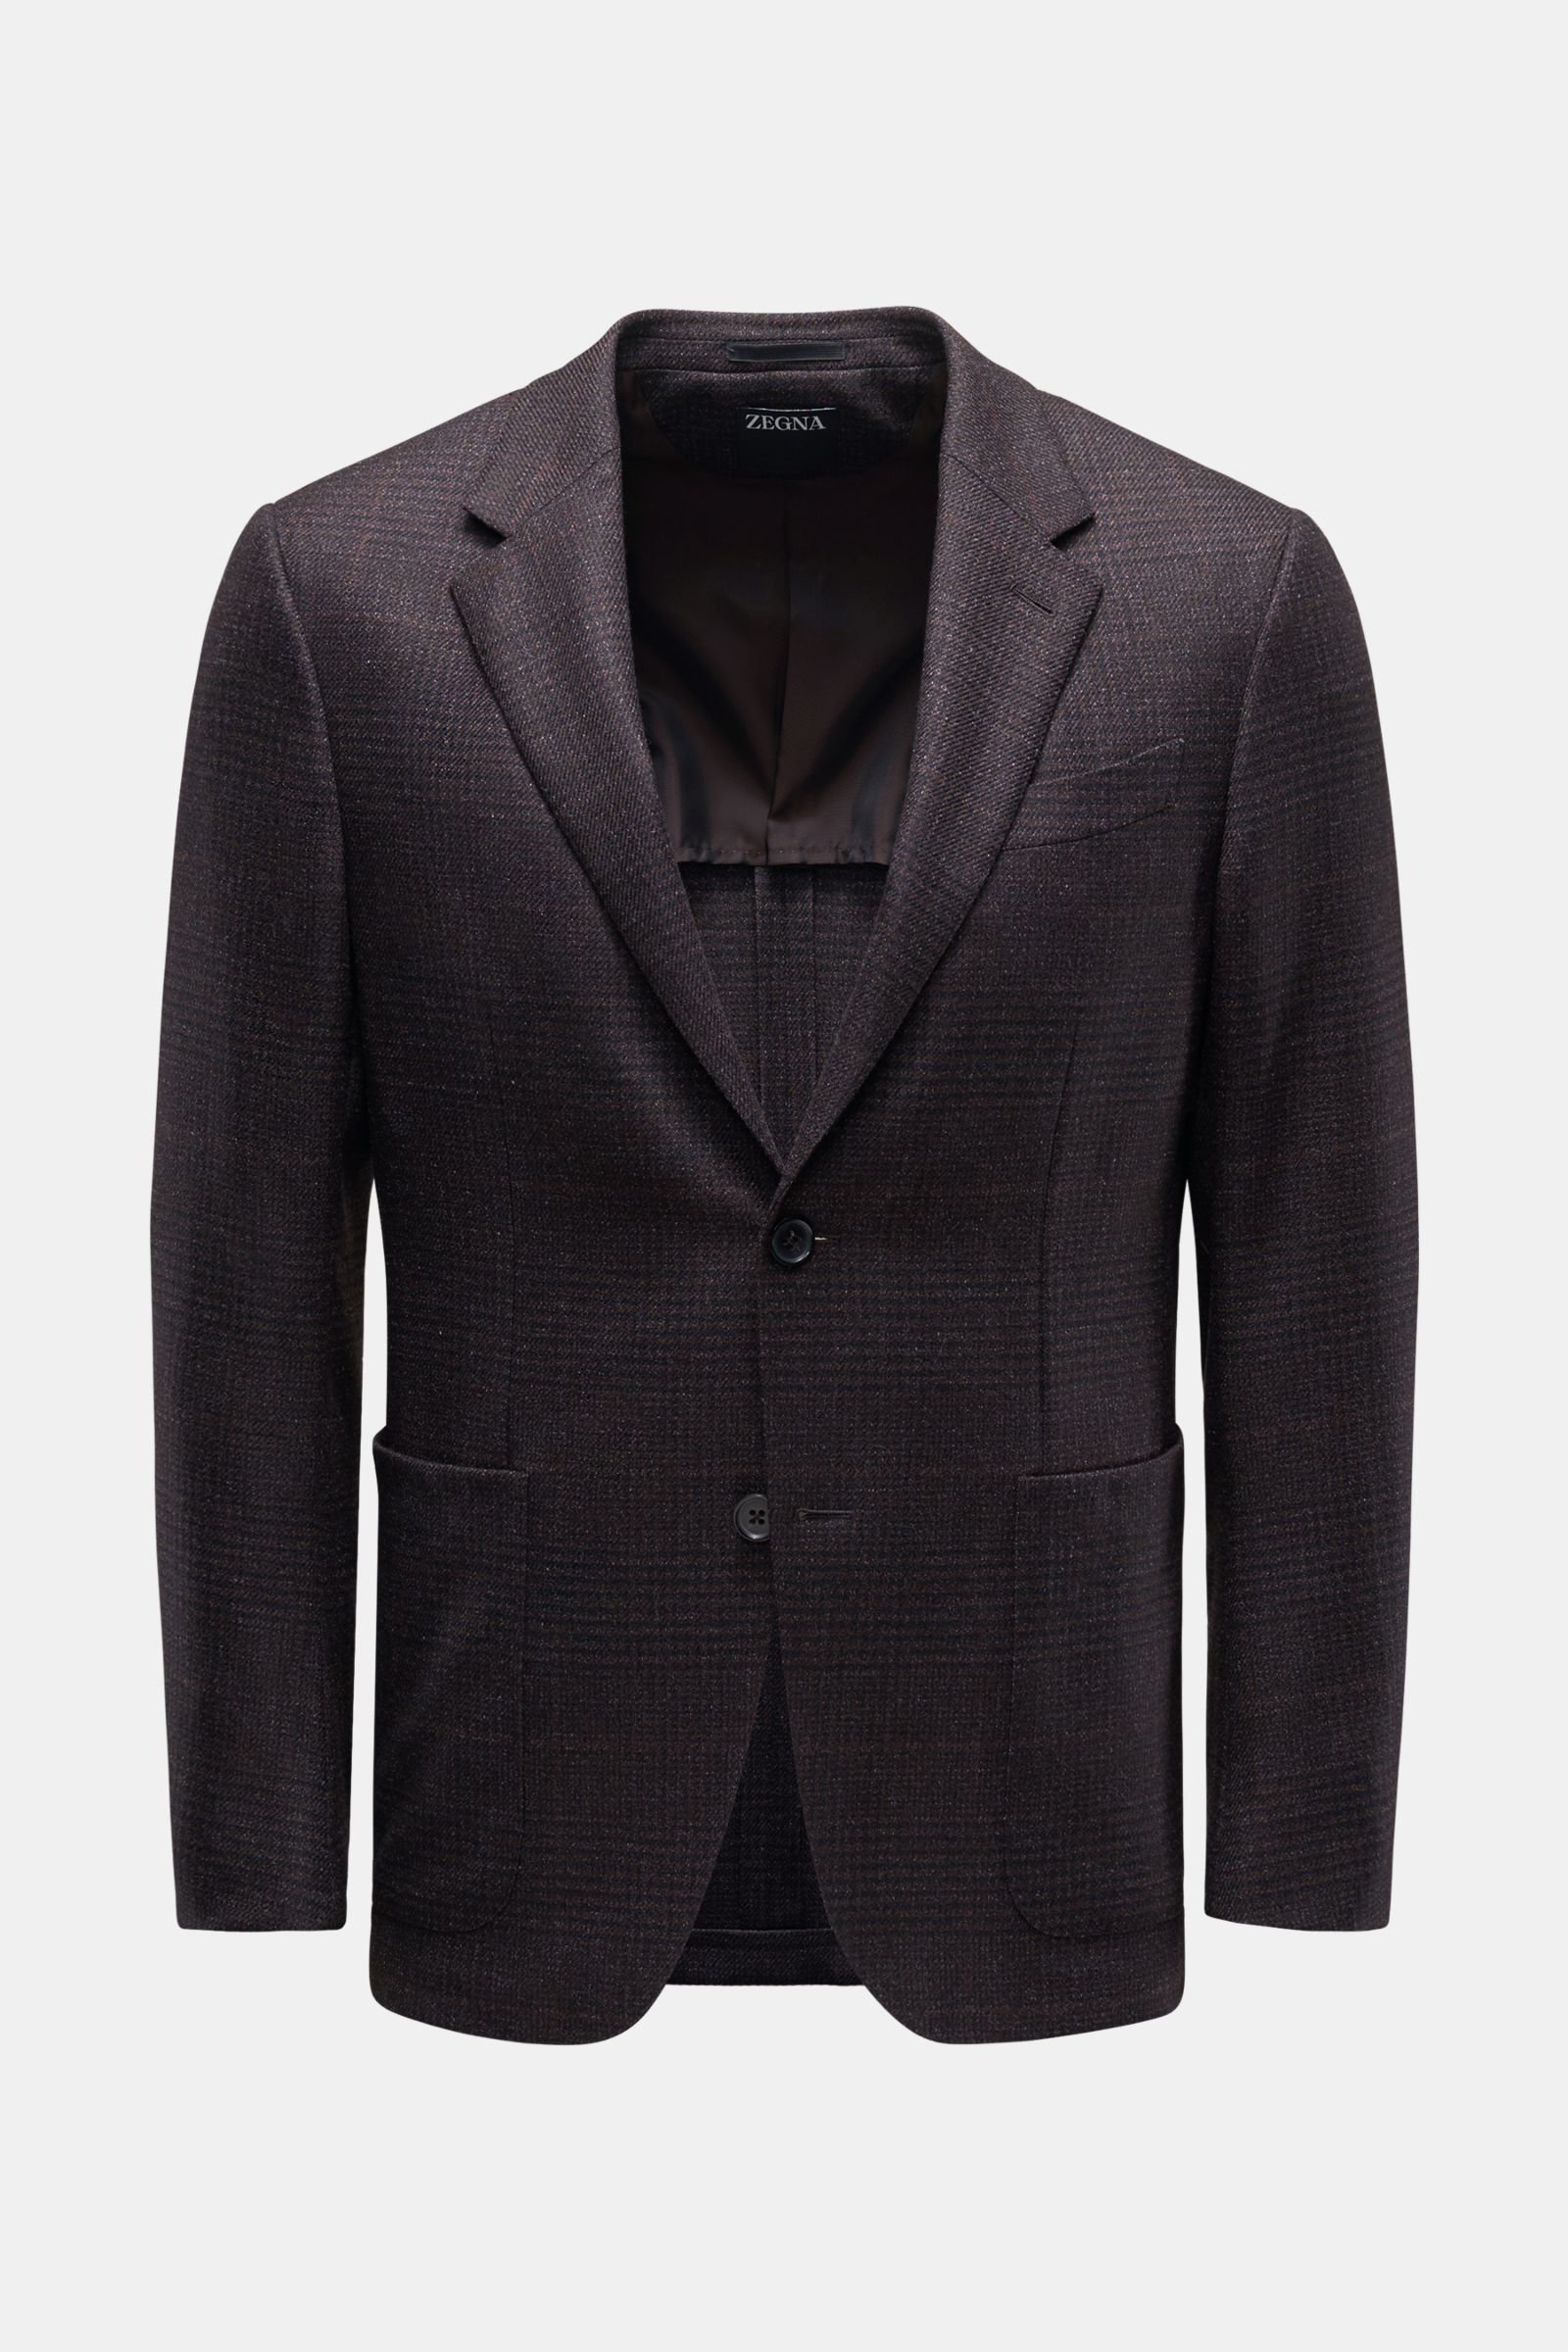 Smart-casual jacket 'Natural' dark brown/black checked